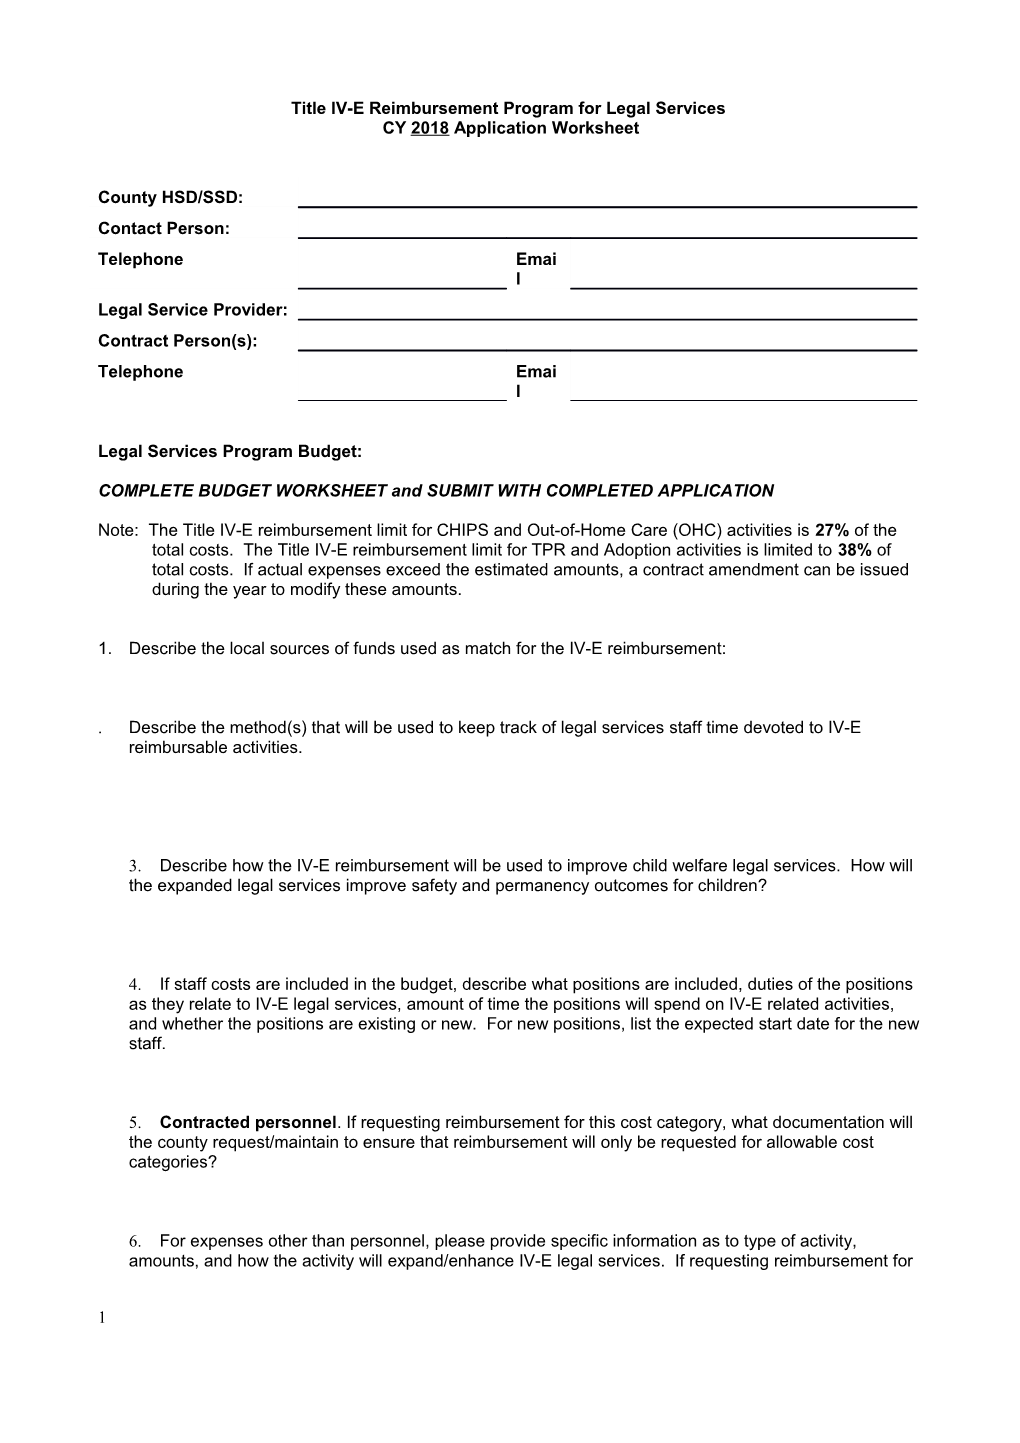 Wisconsin Title IV-E Reimbursement Program for Legal Services Application Worksheet